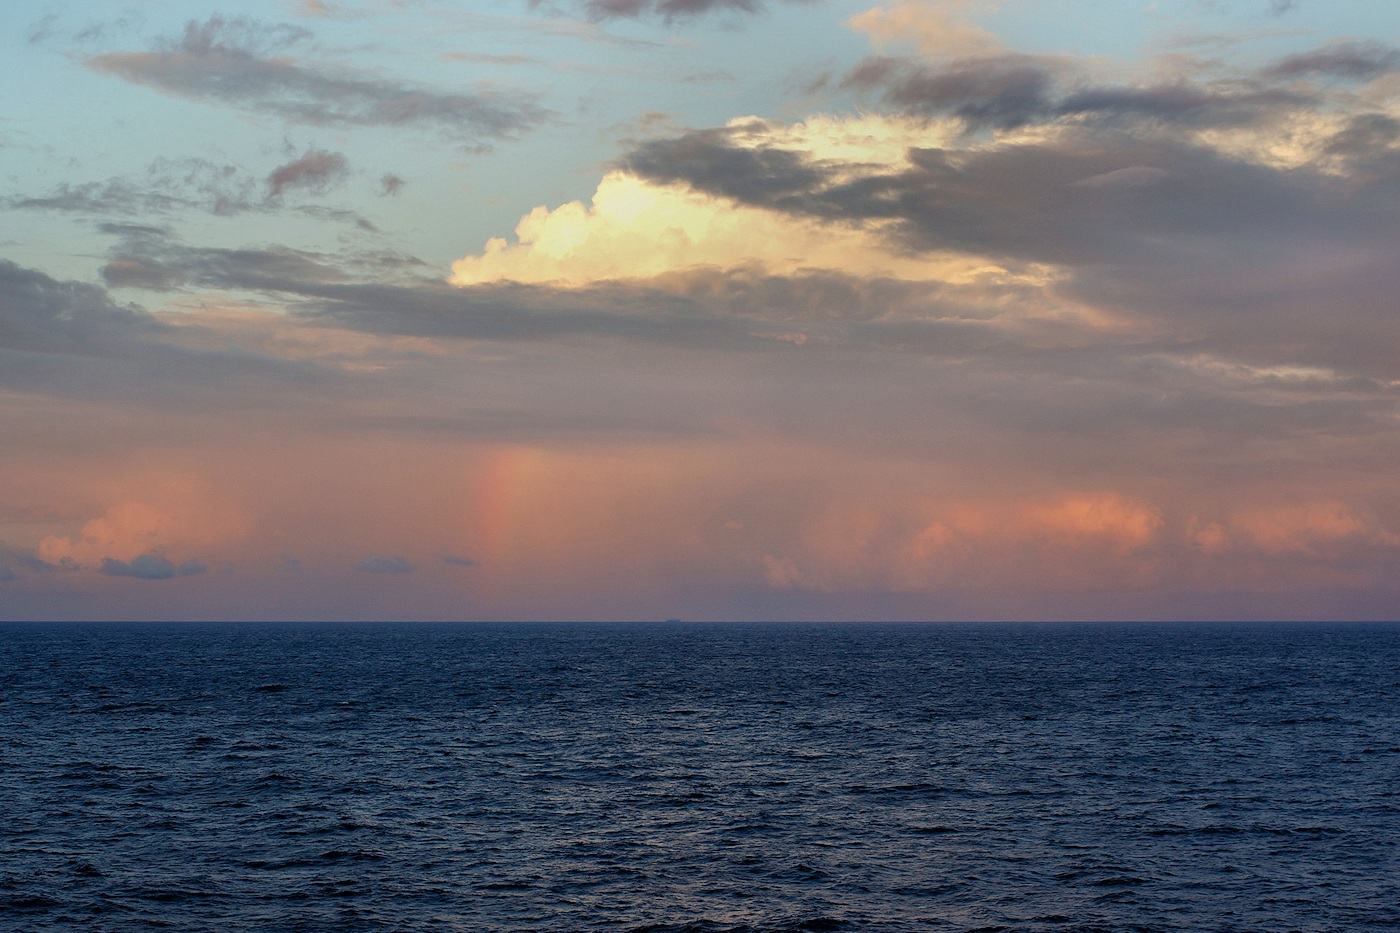 Rainbow, sunset, and ship